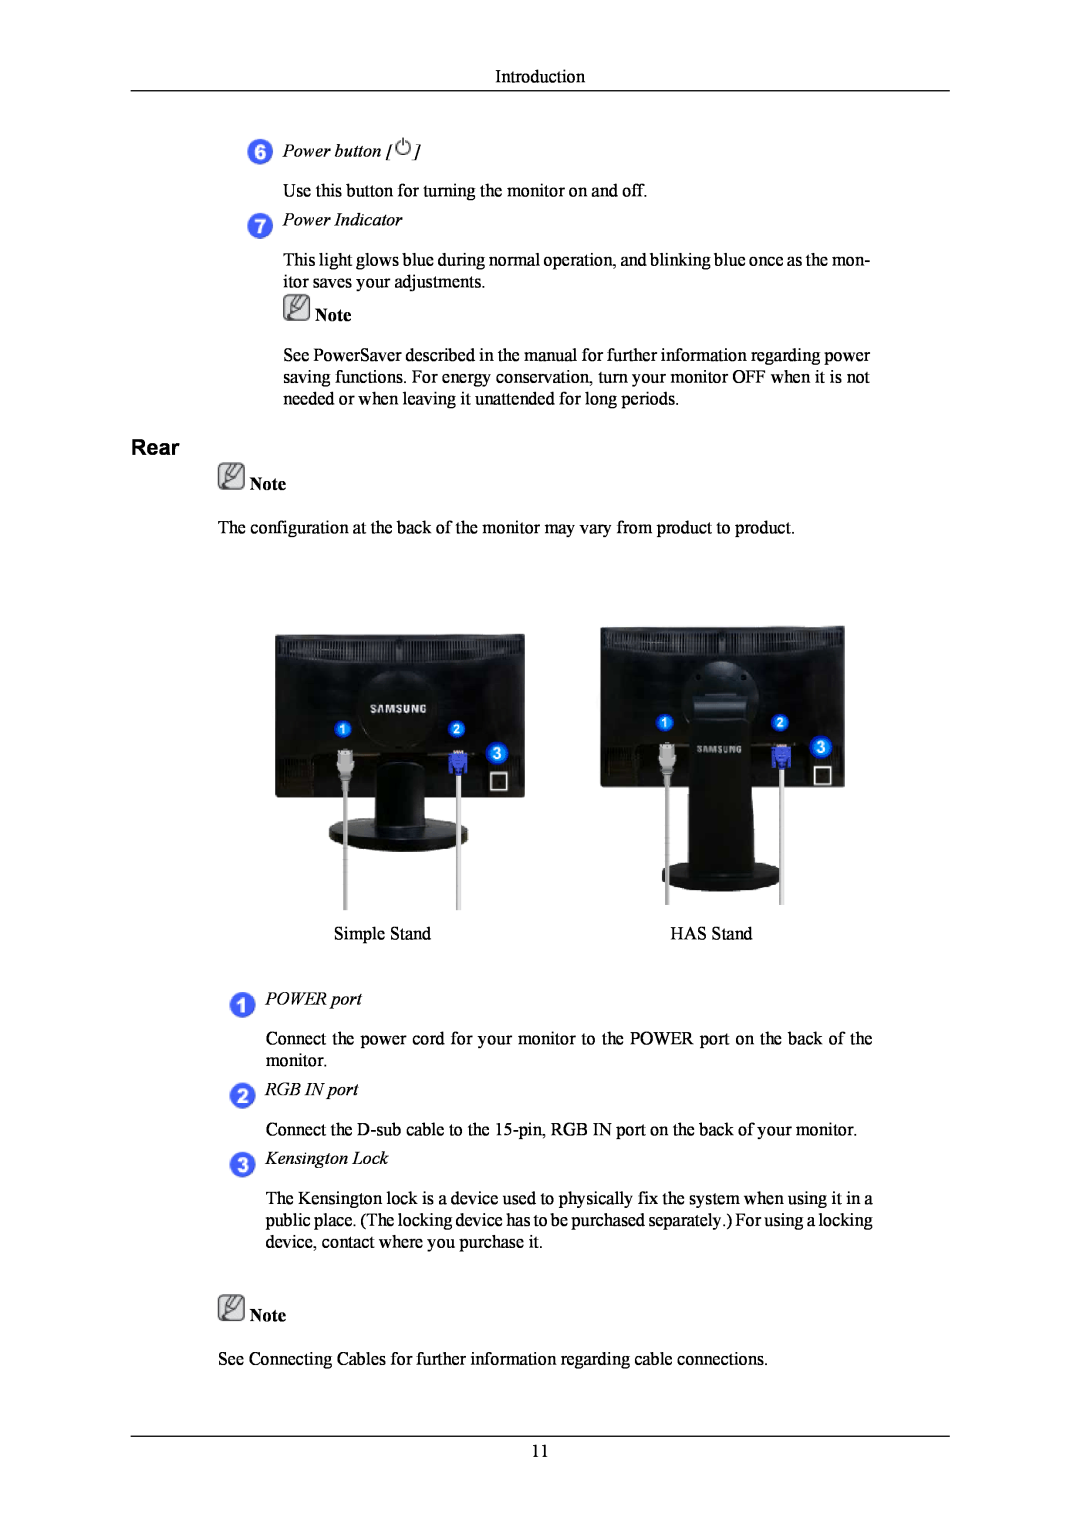 Samsung 2043NWX user manual Rear, Power button, Power Indicator, POWER port, RGB IN port, Kensington Lock 